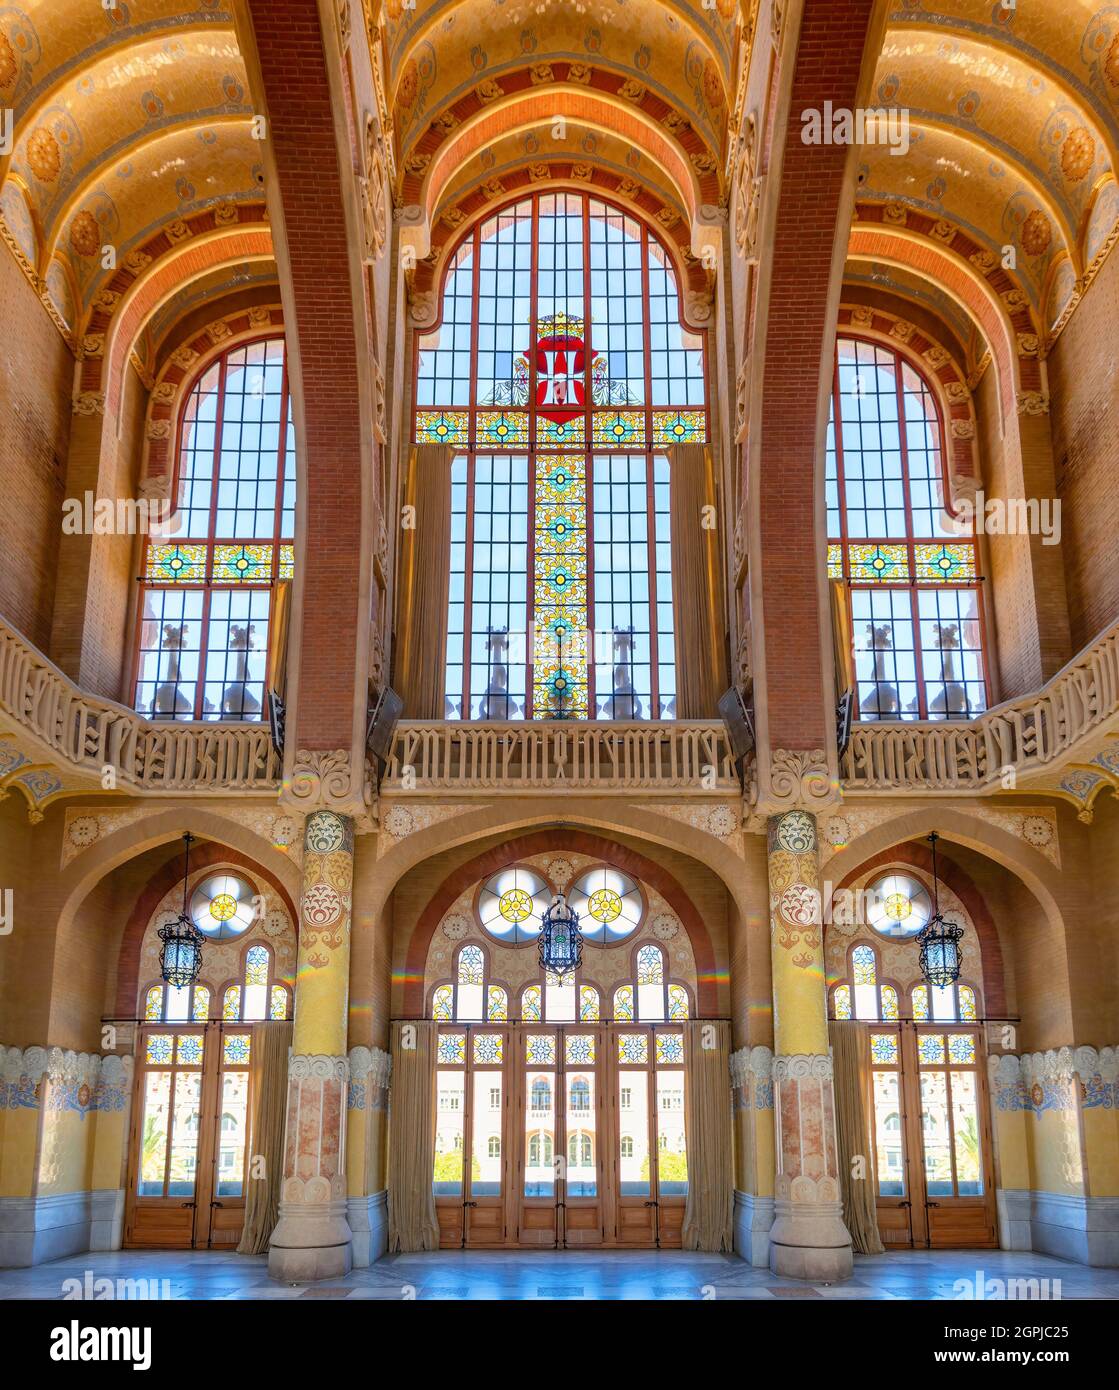 Barcelona, Spain - September 19, 2021: stained glass windows in the hall of Hospital of the Holy Cross and Saint Paul (de la Santa Creu i Sant Pau) Stock Photo